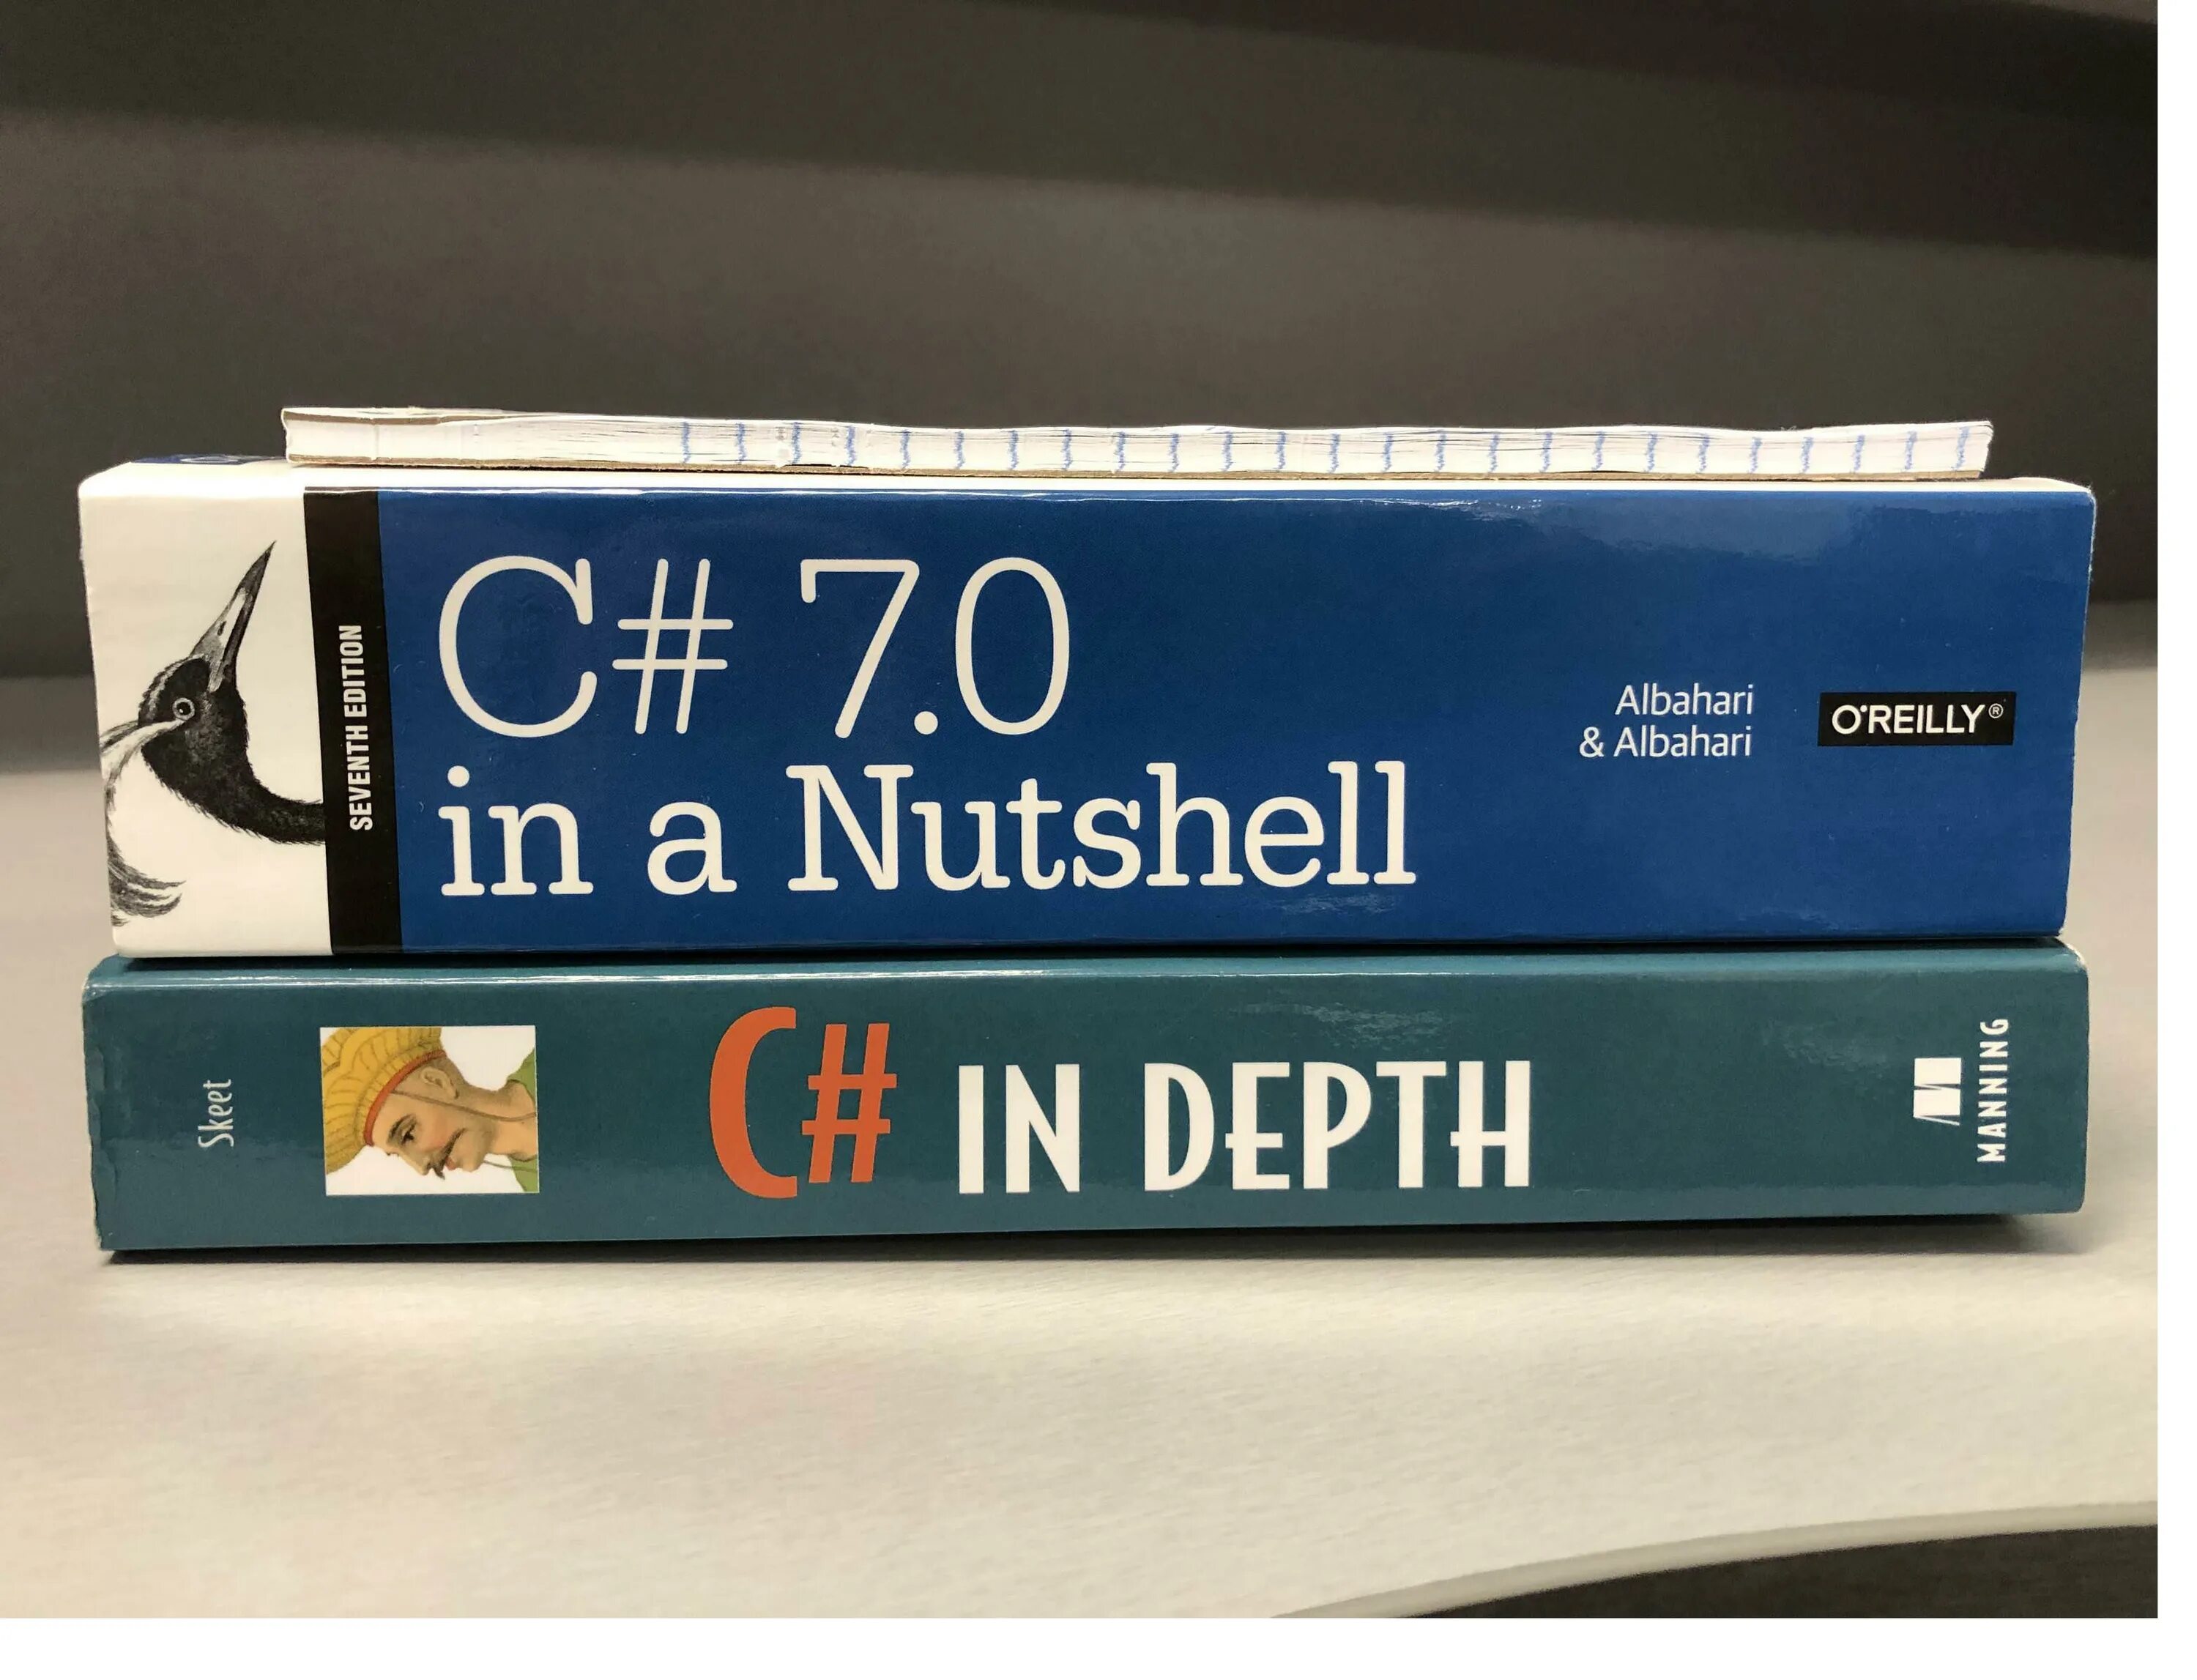 In Nutshell книга. Nutshell c++ книга. C# in a Nutshell. C# 10 in a Nutshell.